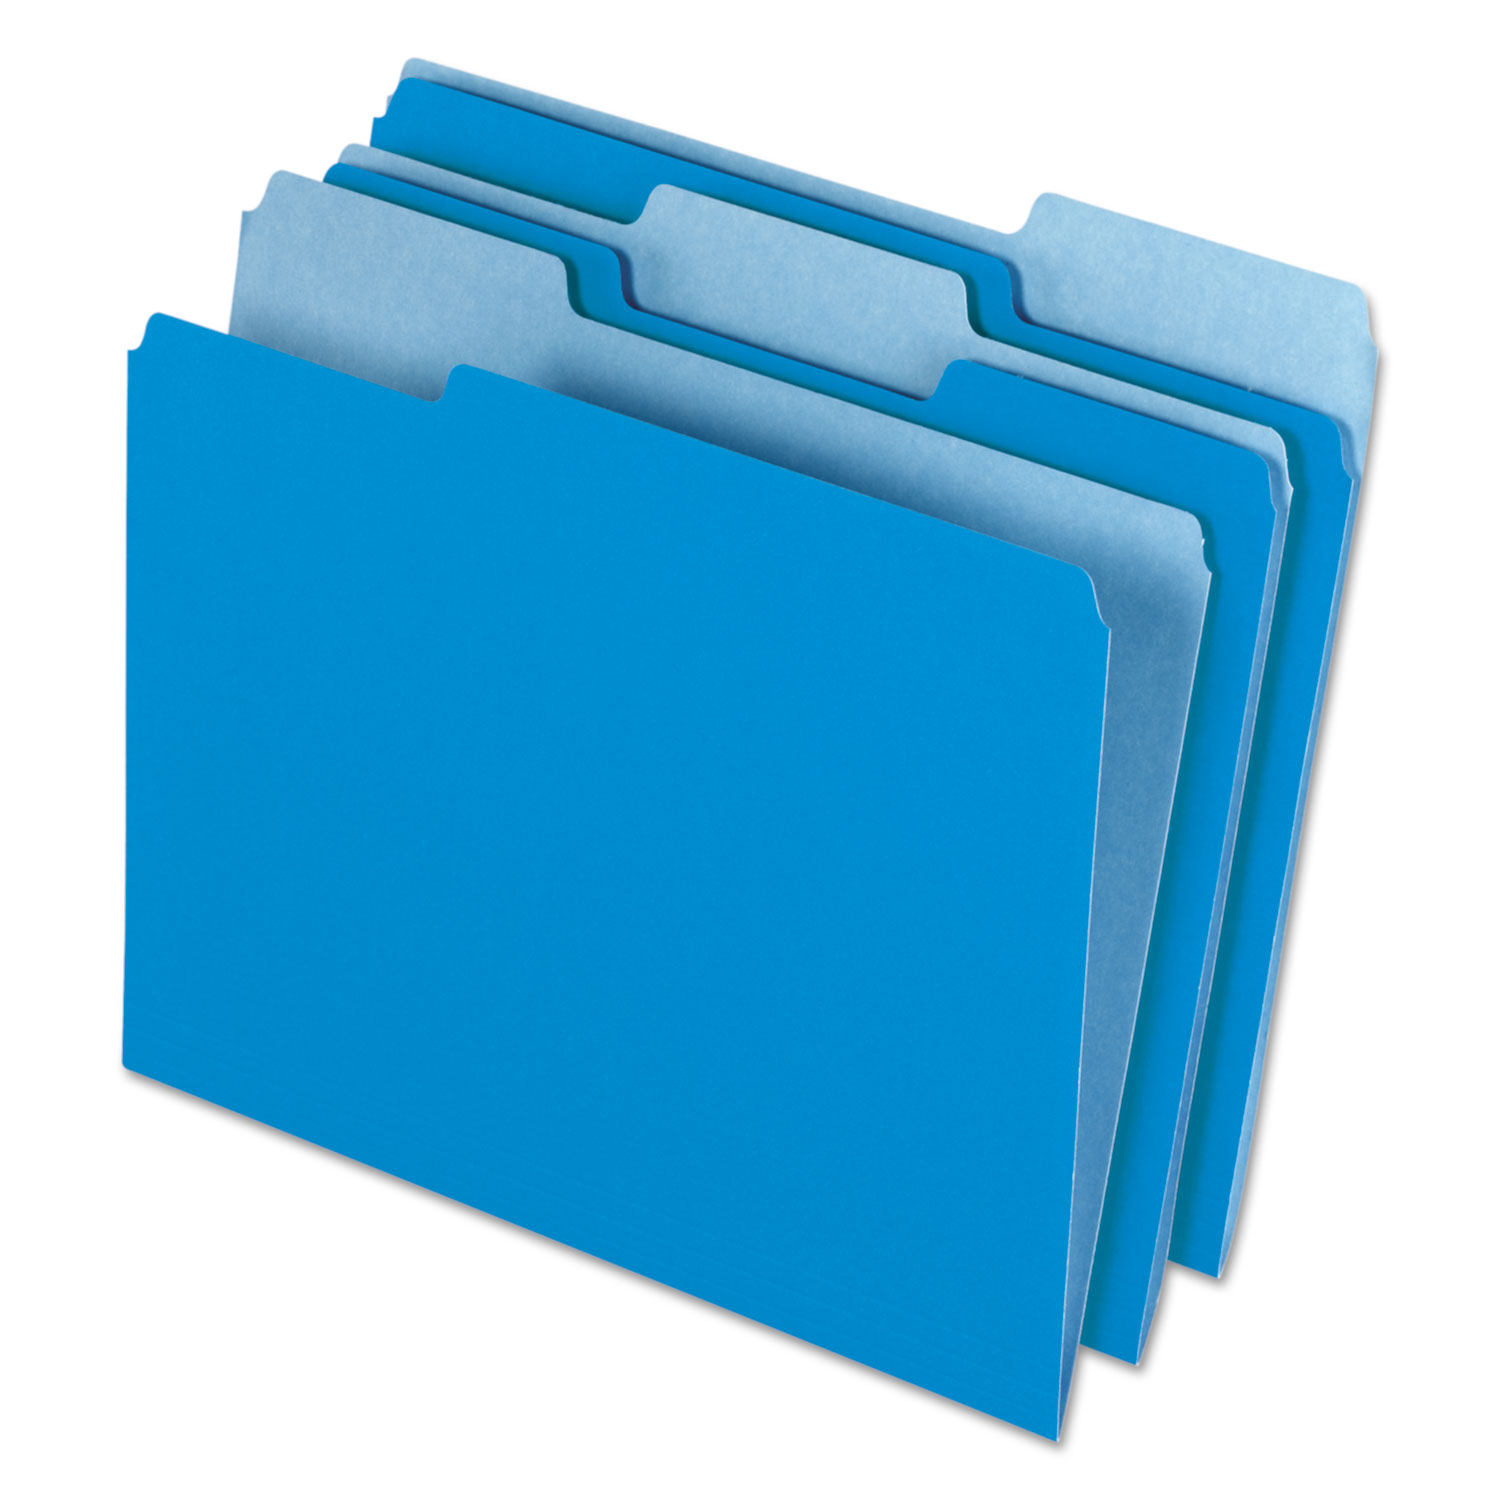  Pendaflex 4210 1/3 BLU Interior File Folders, 1/3-Cut Tabs, Letter Size, Blue, 100/Box (PFX421013BLU) 